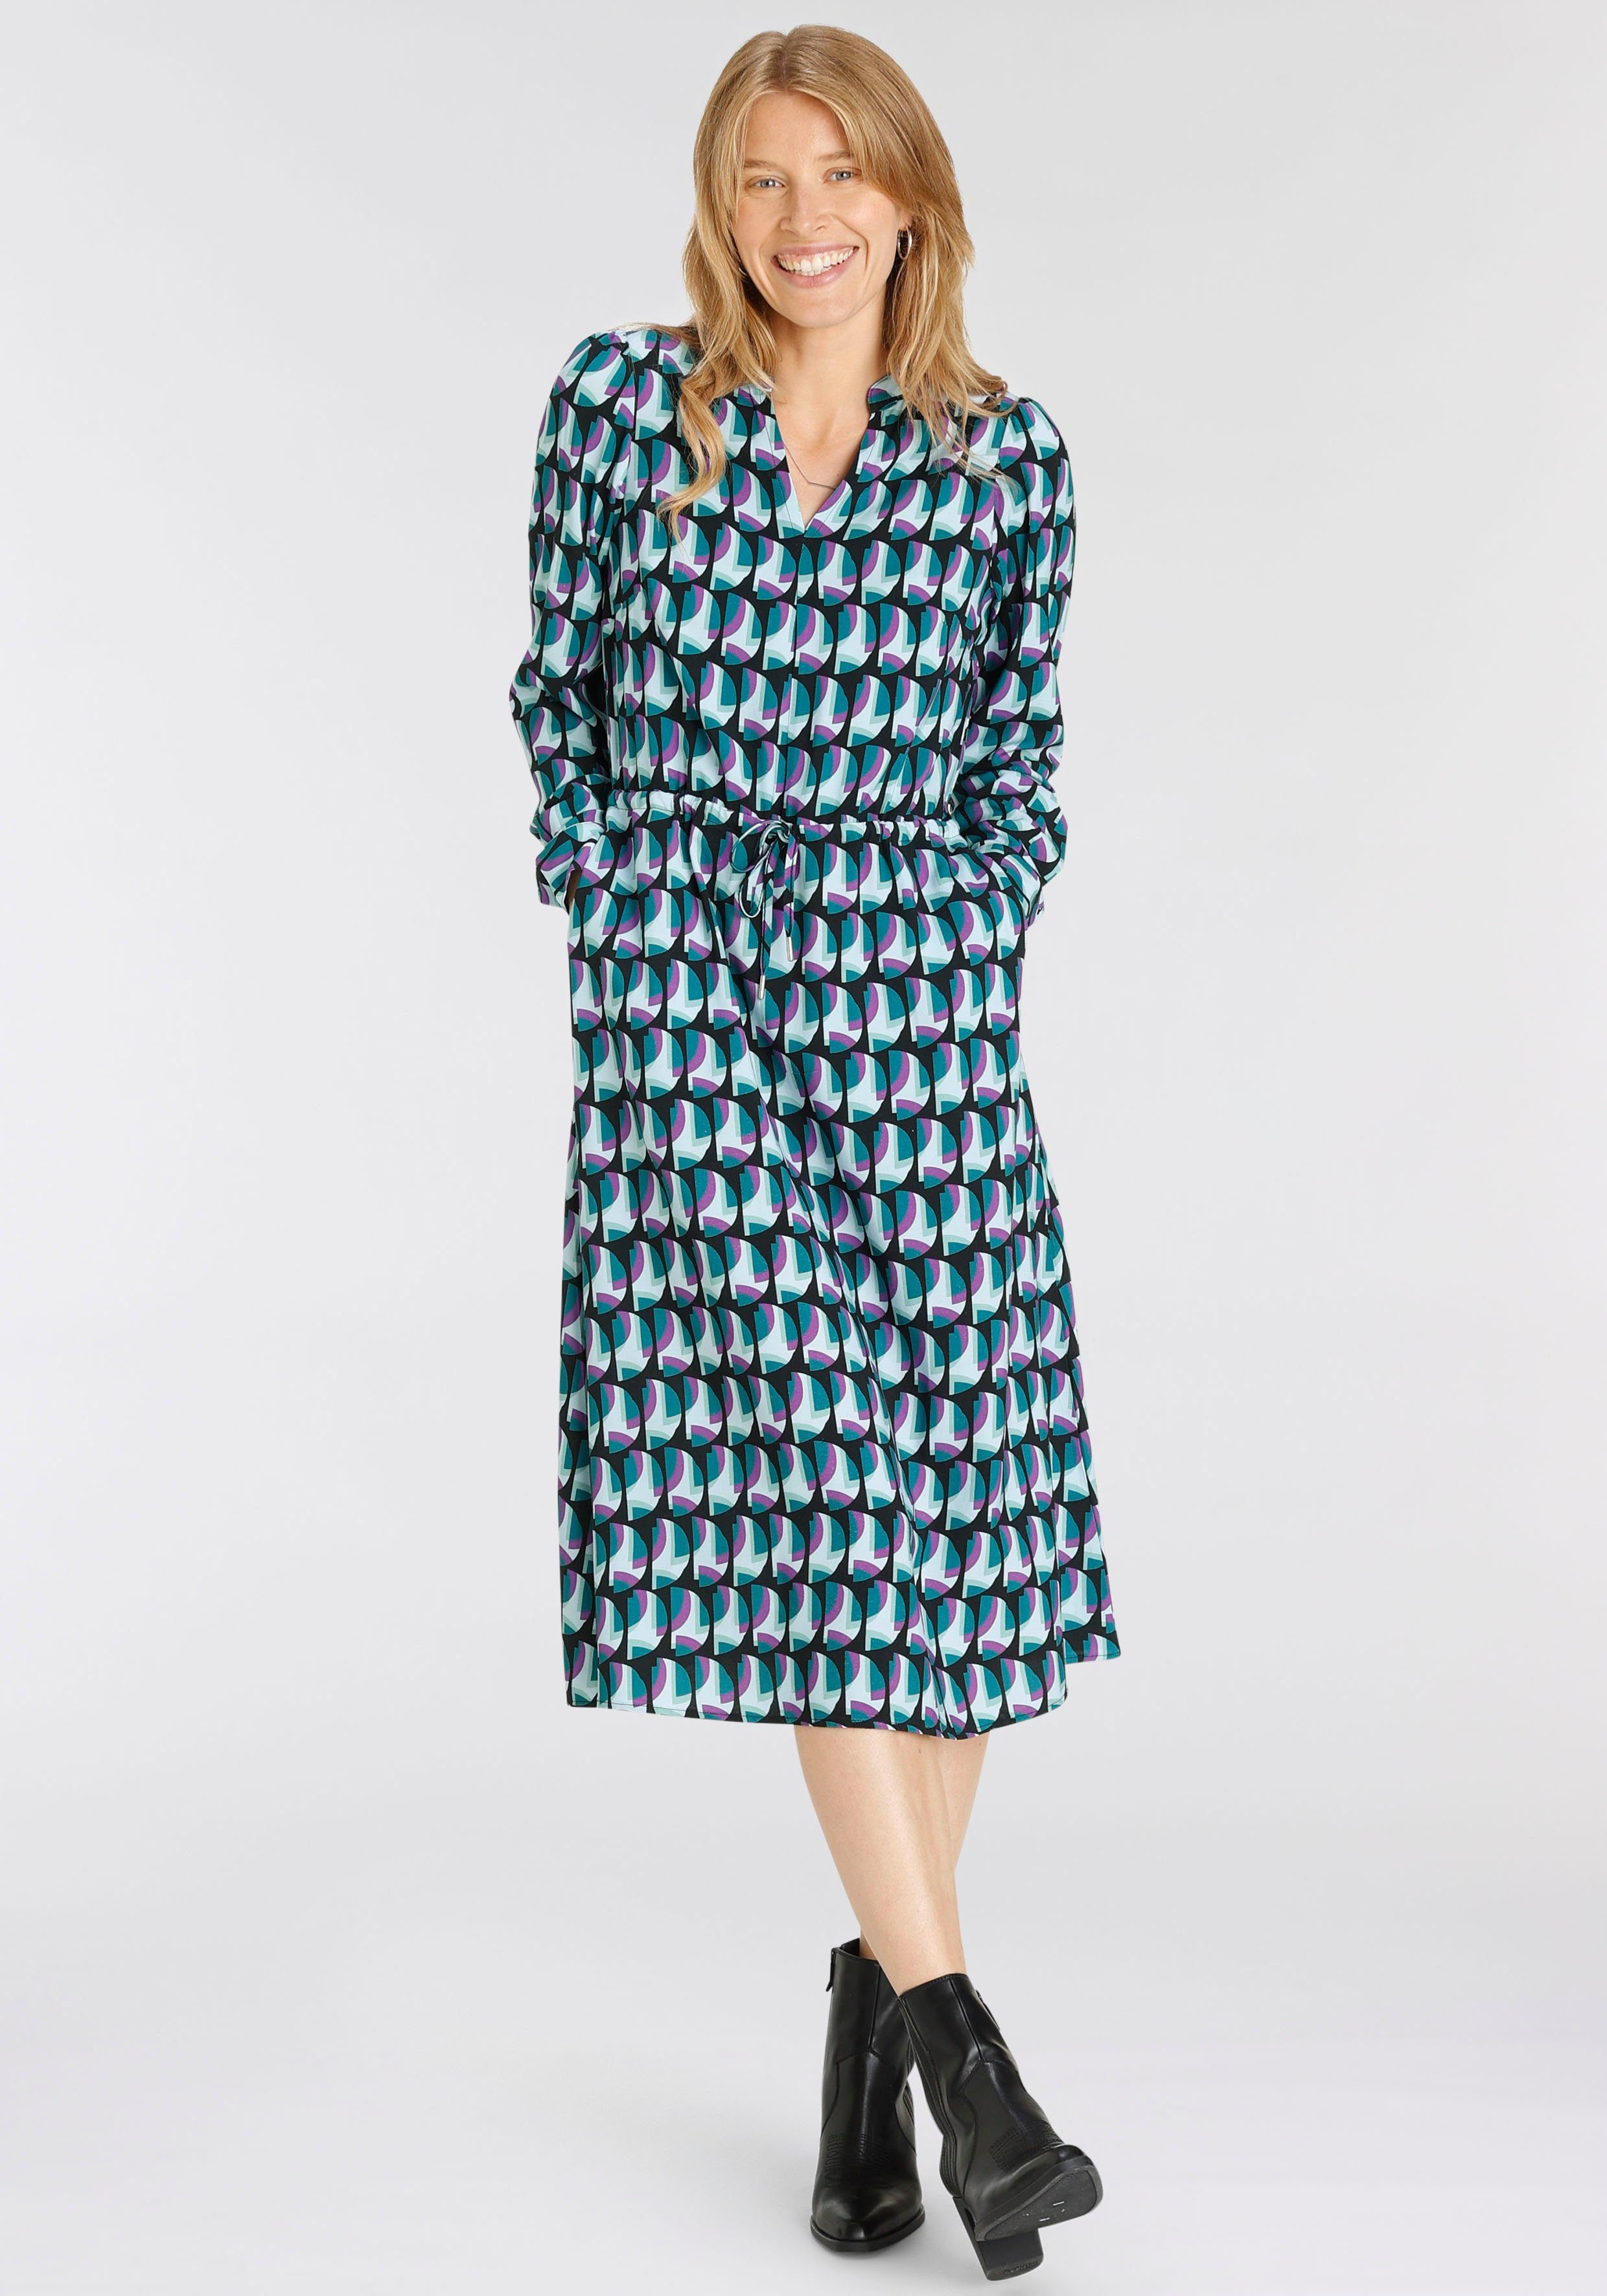 HECHTER PARIS Hemdblusenkleid elegantem mit Allover-Print